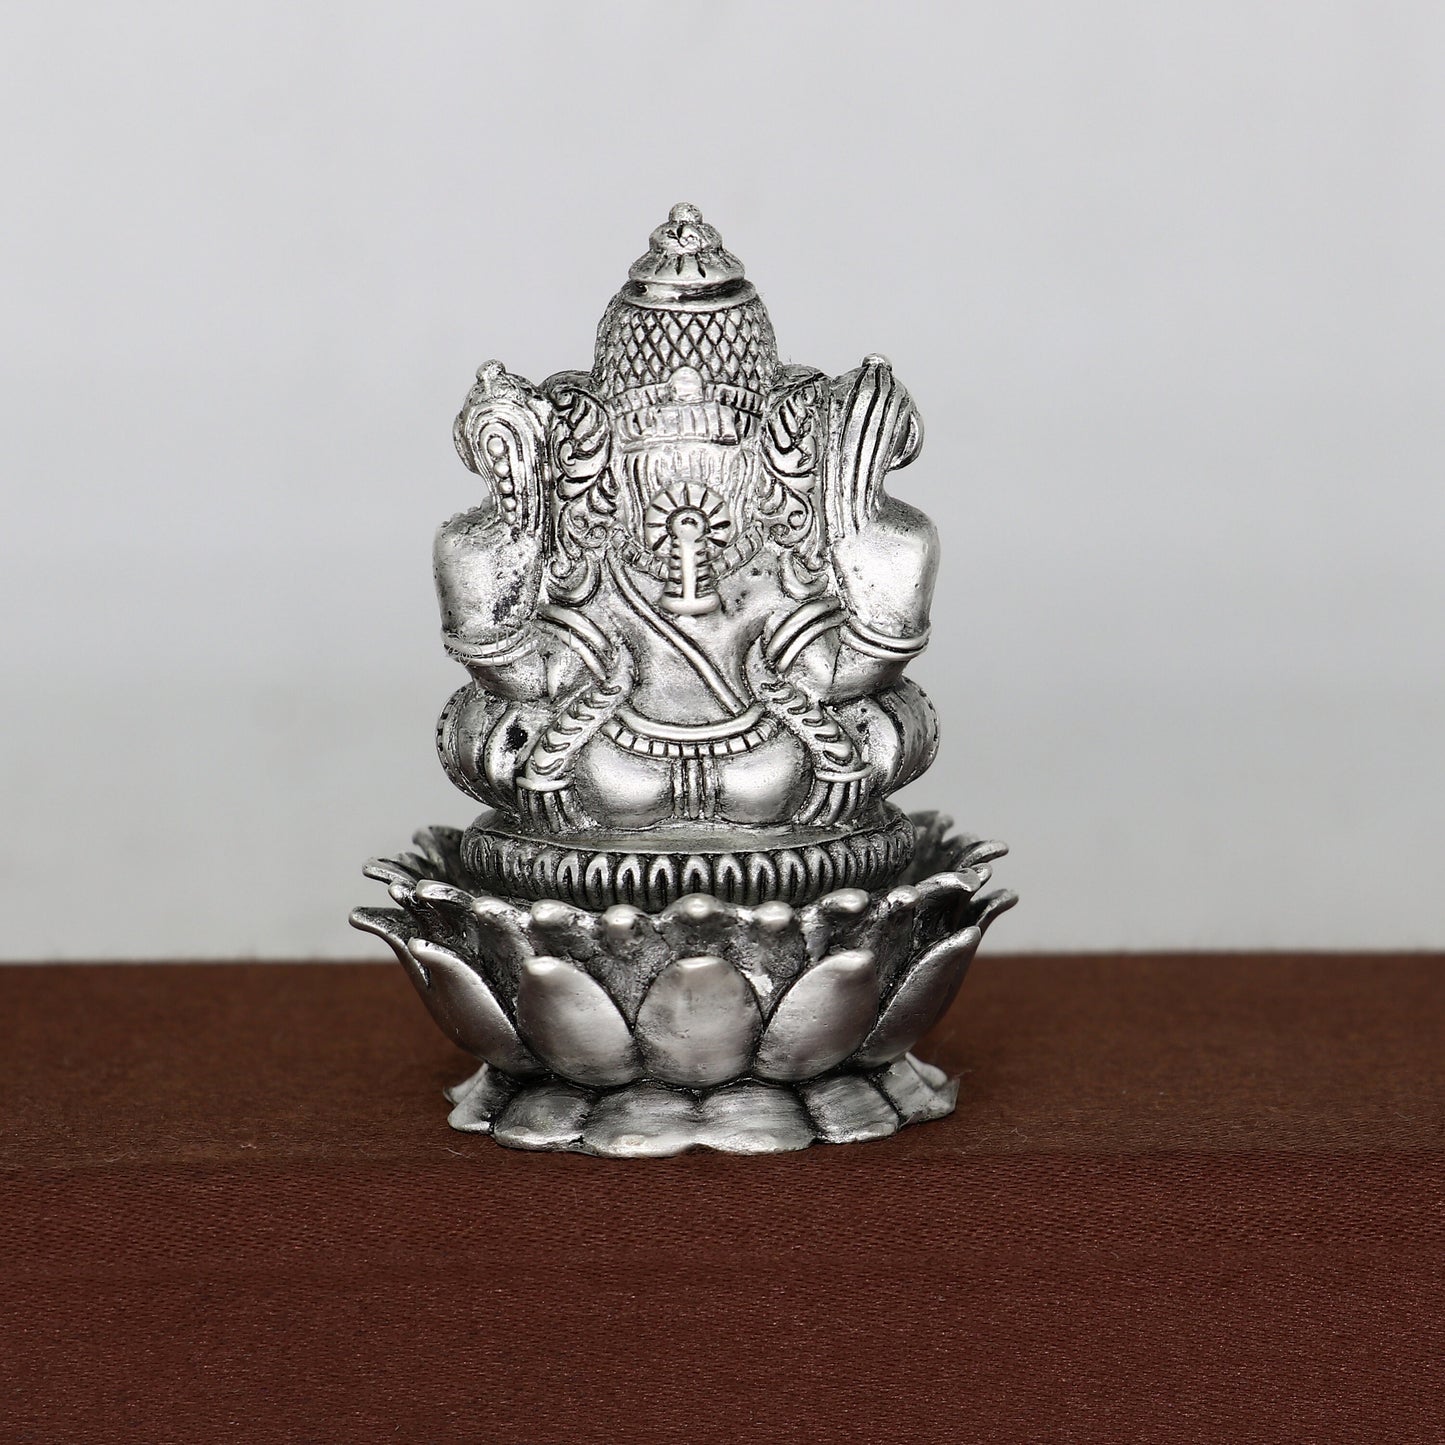 925 Sterling silver Lord Ganesh Idol, Pooja Articles, Silver Idols Figurine, handcrafted Ganesha statue sculpture Diwali puja gift art668 - TRIBAL ORNAMENTS